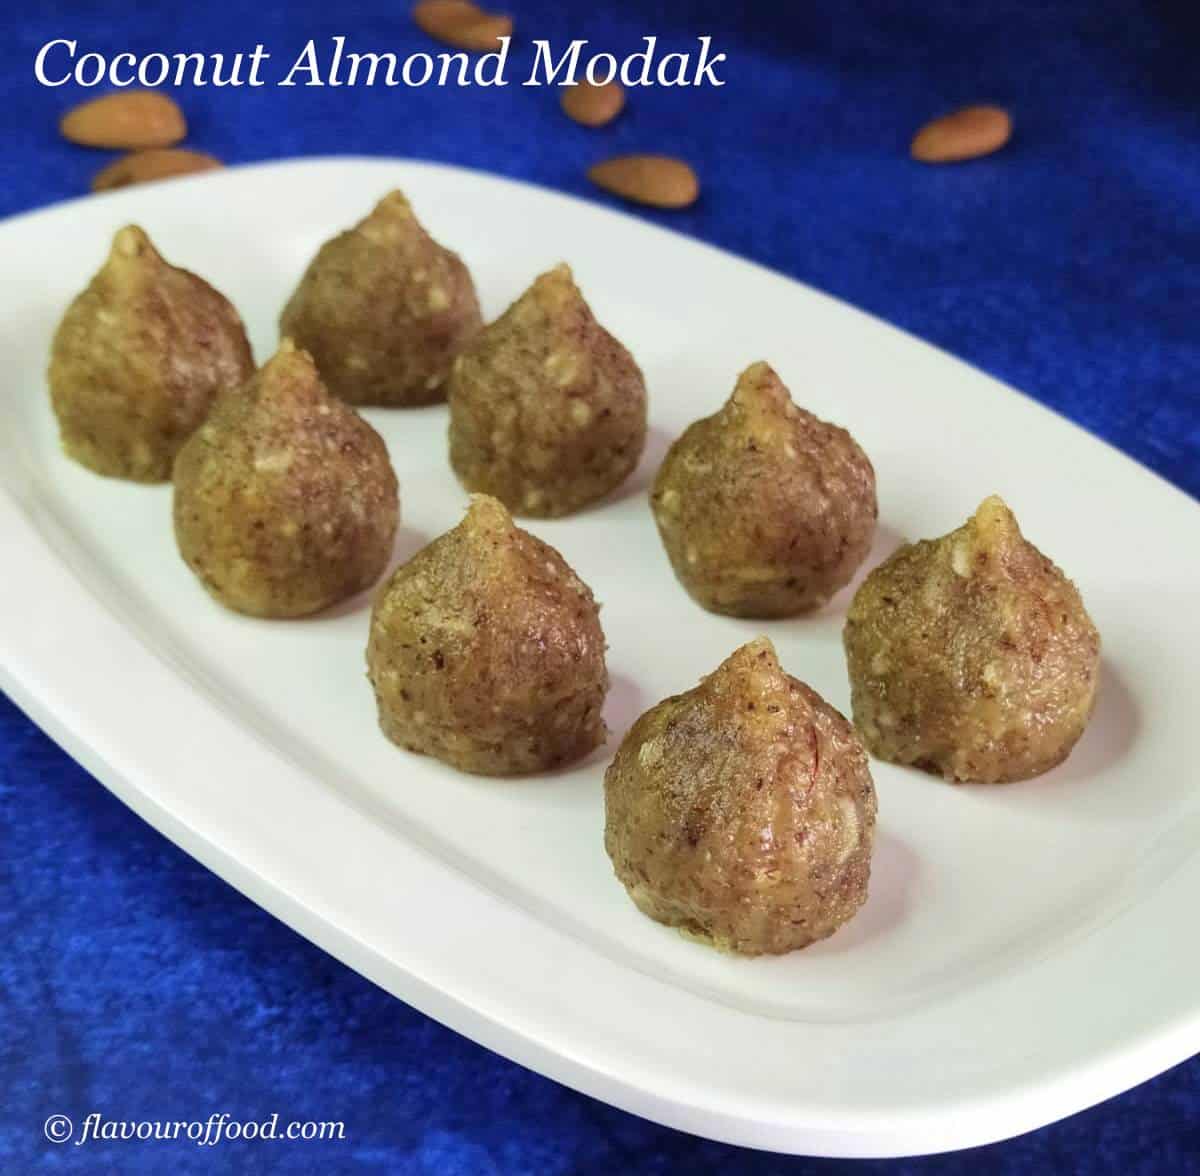 Coconut Almond Modak